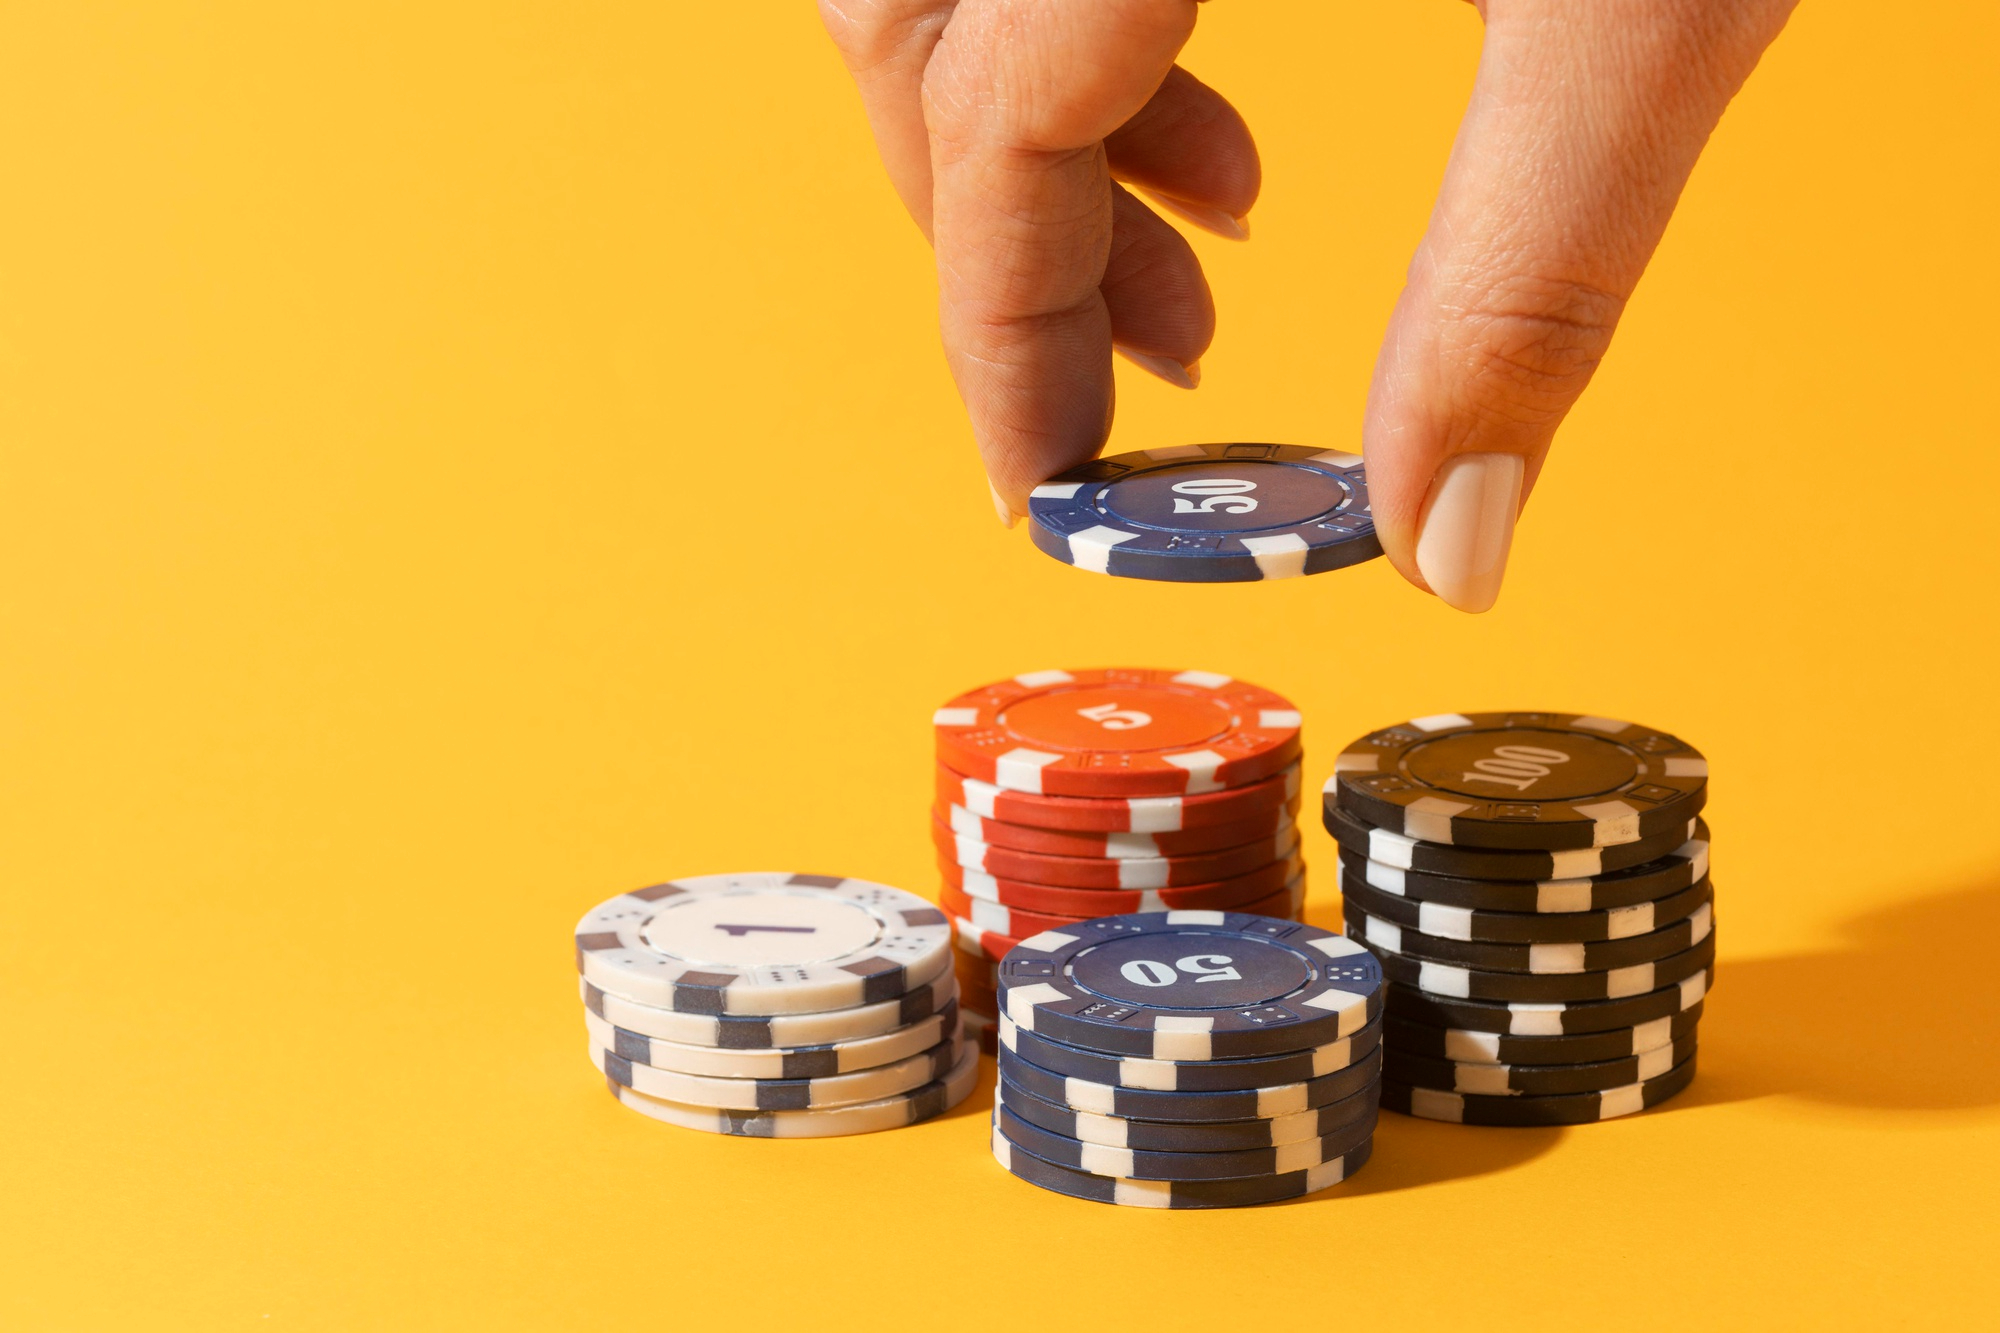 Arabic style gambling: your way to big wins